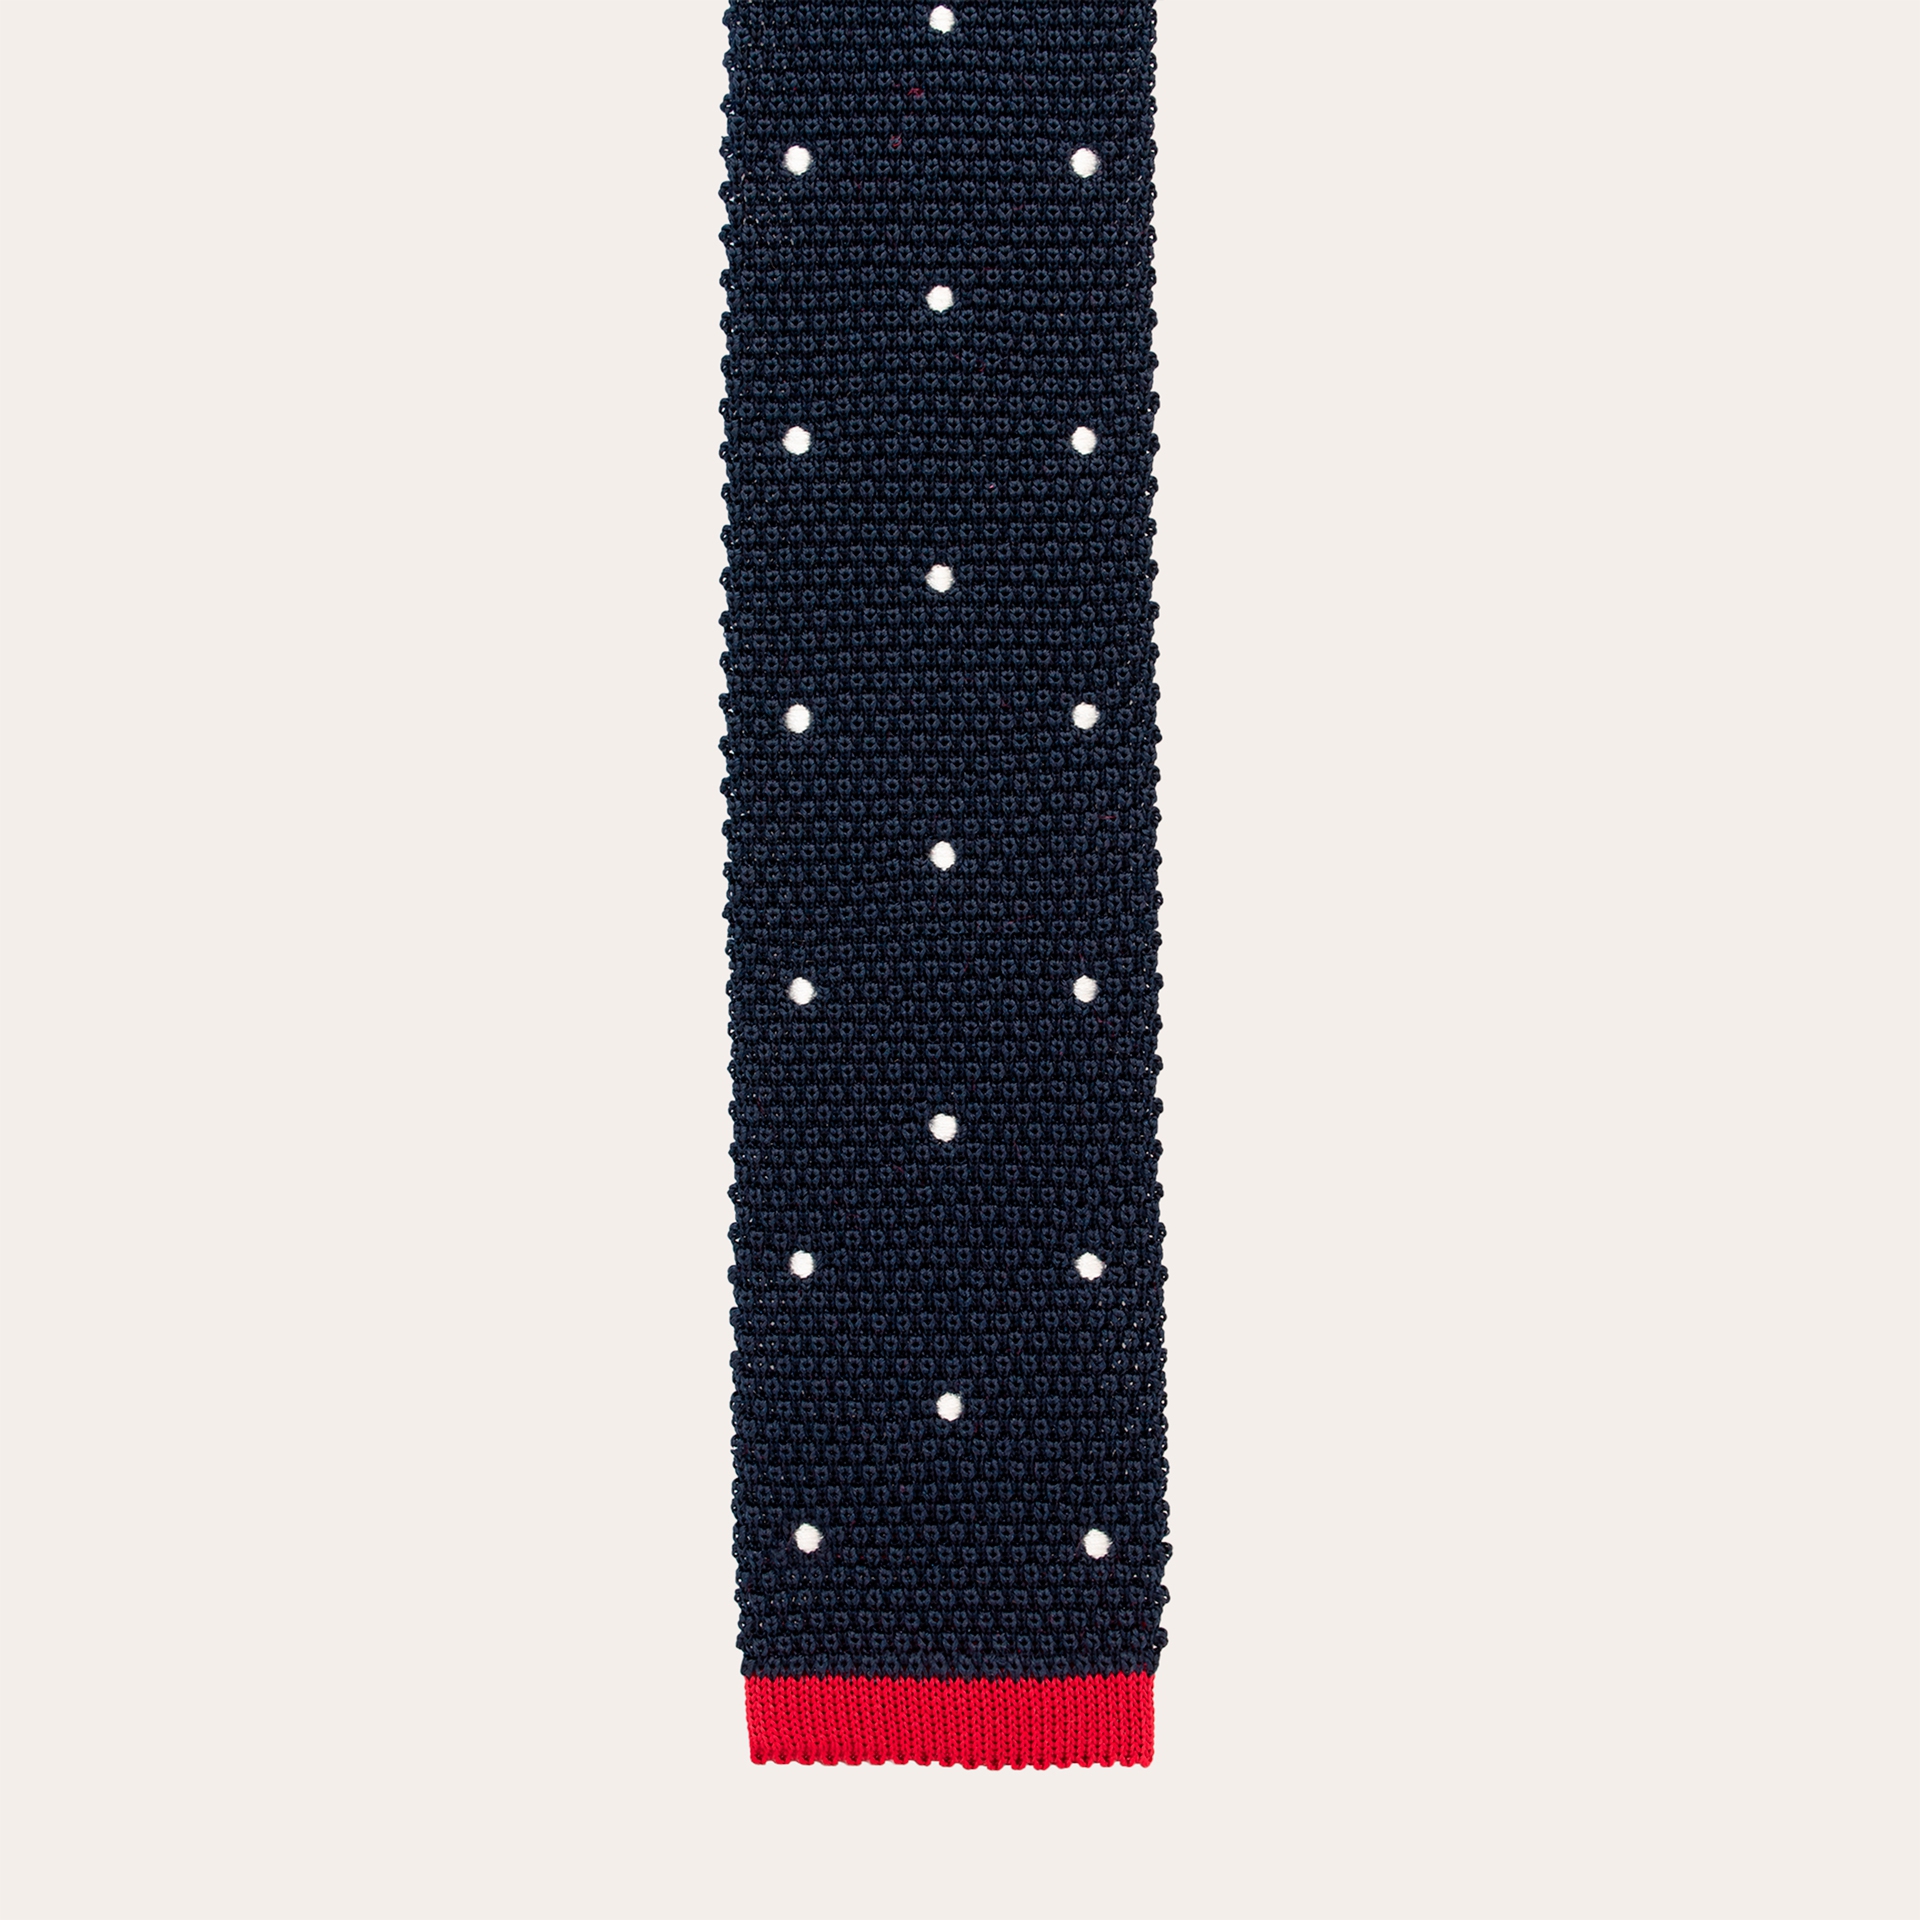 Cravatta tricot in seta blu navy con motivo a pois bianchi